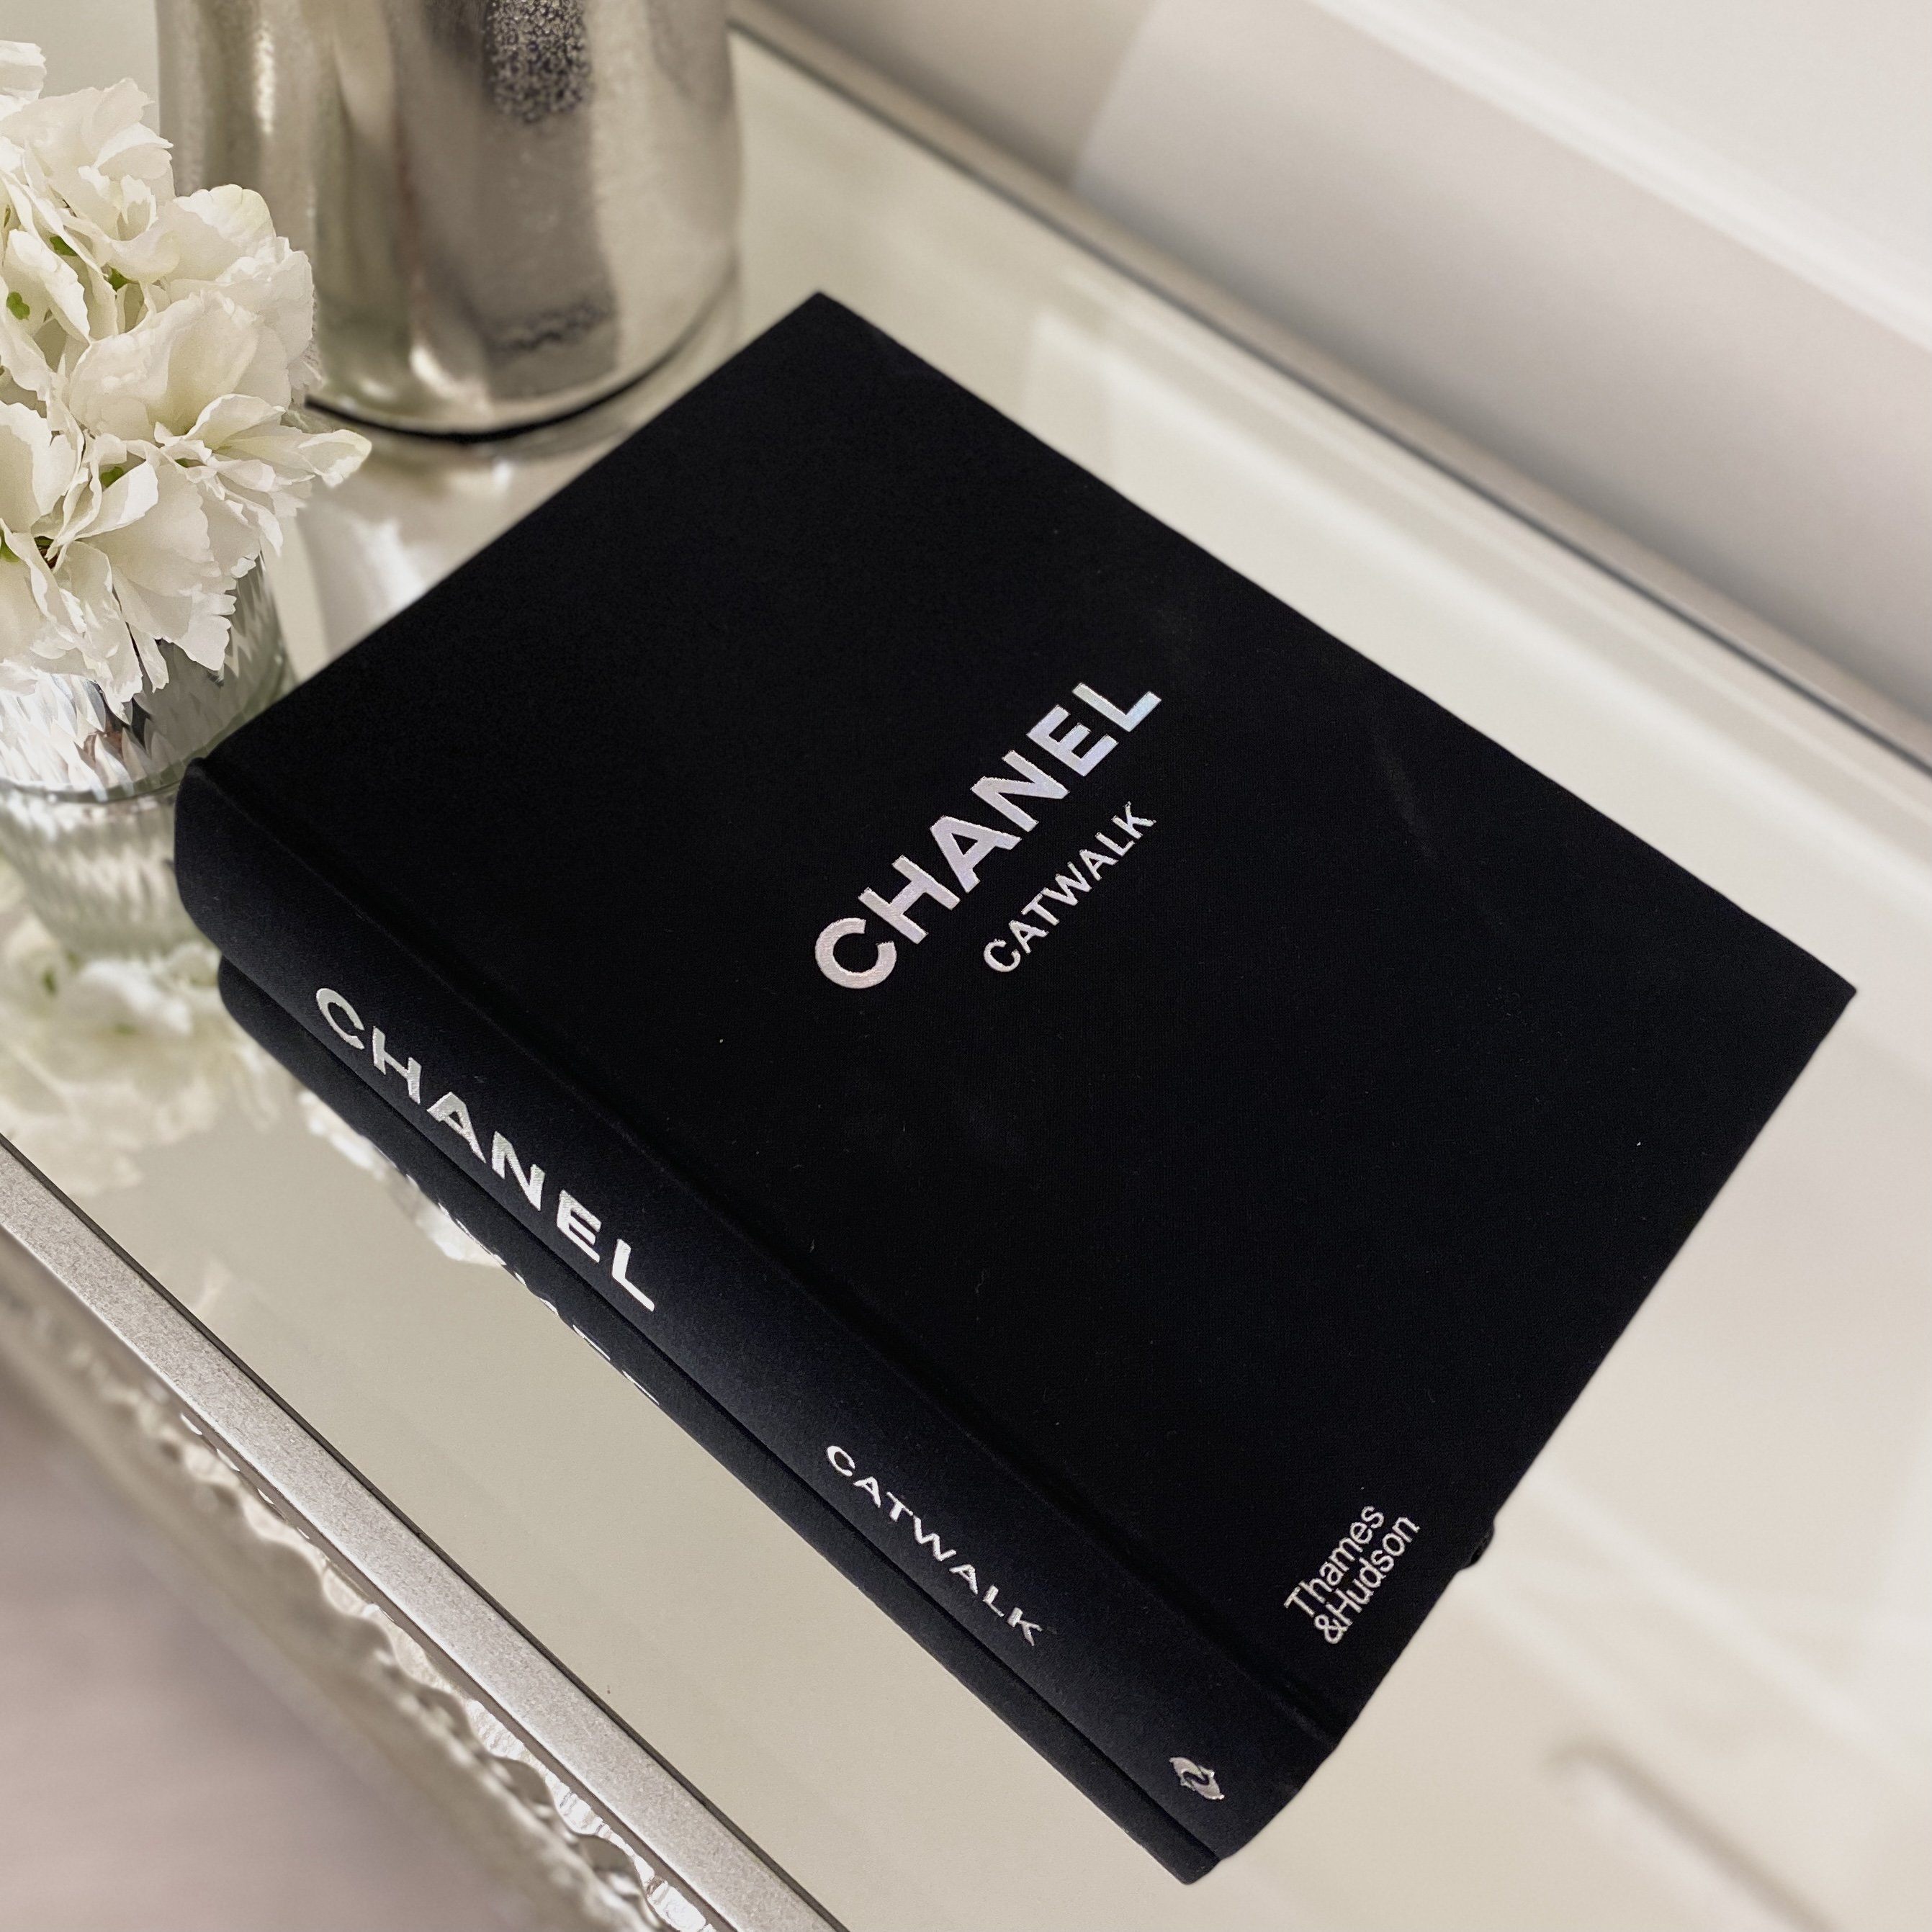 Chanel - (Catwalk) (Hardcover)